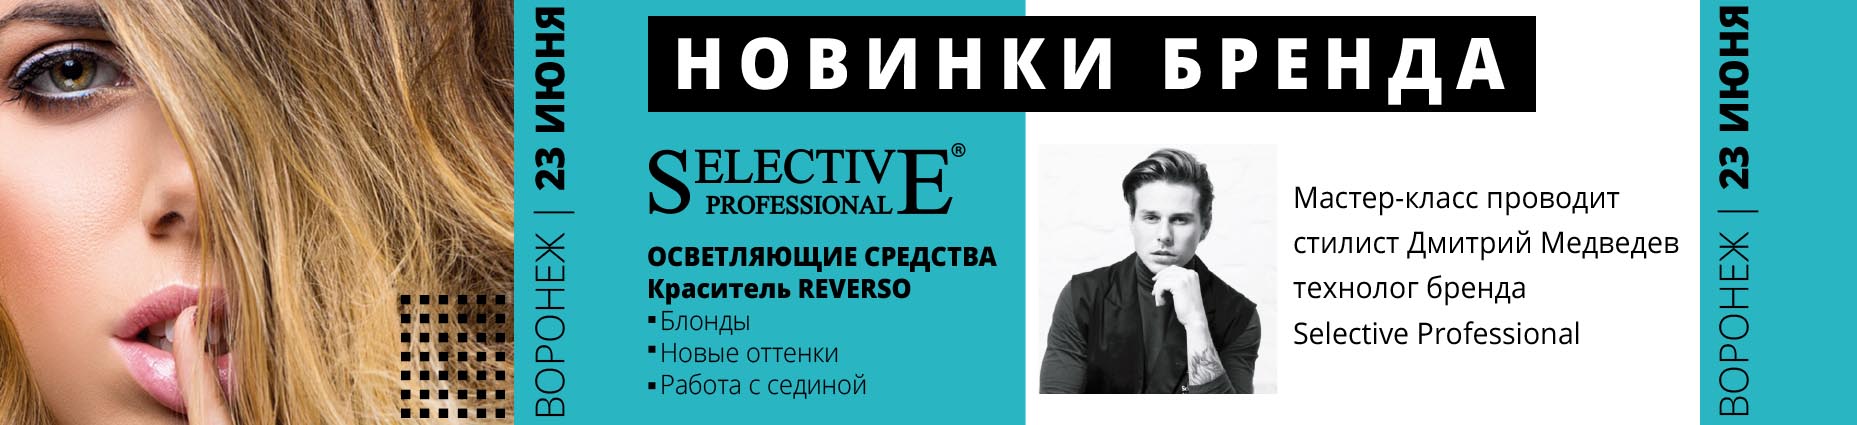 Мастер-класс: Новинки Selective Professional. Технолог Дмитрий Медведев. 23.06.2021